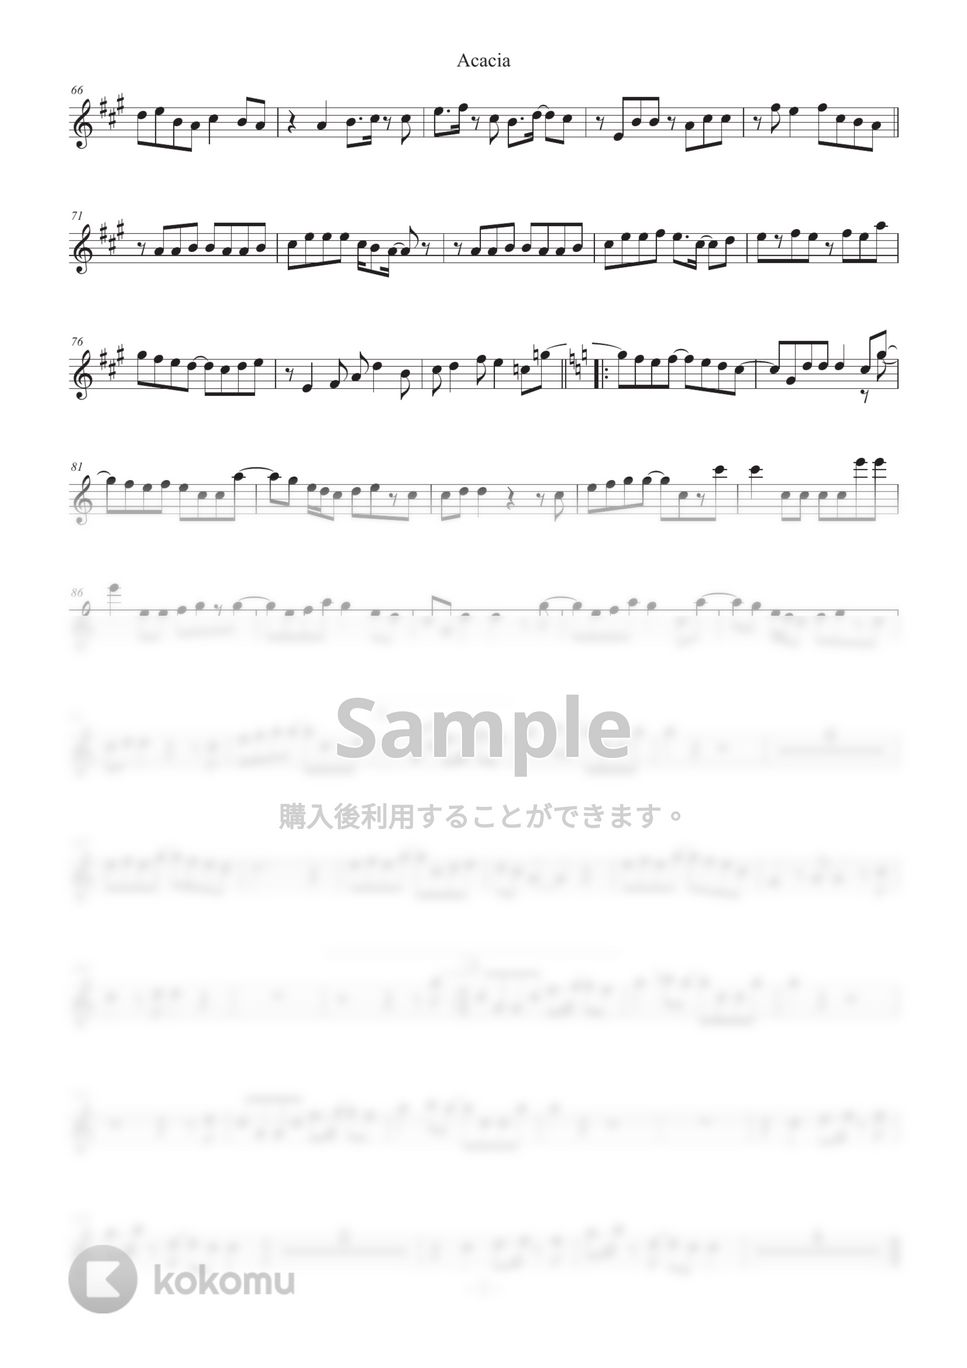 BUMP OF CHICKEN - アカシア(inB♭) by HiRO Sax